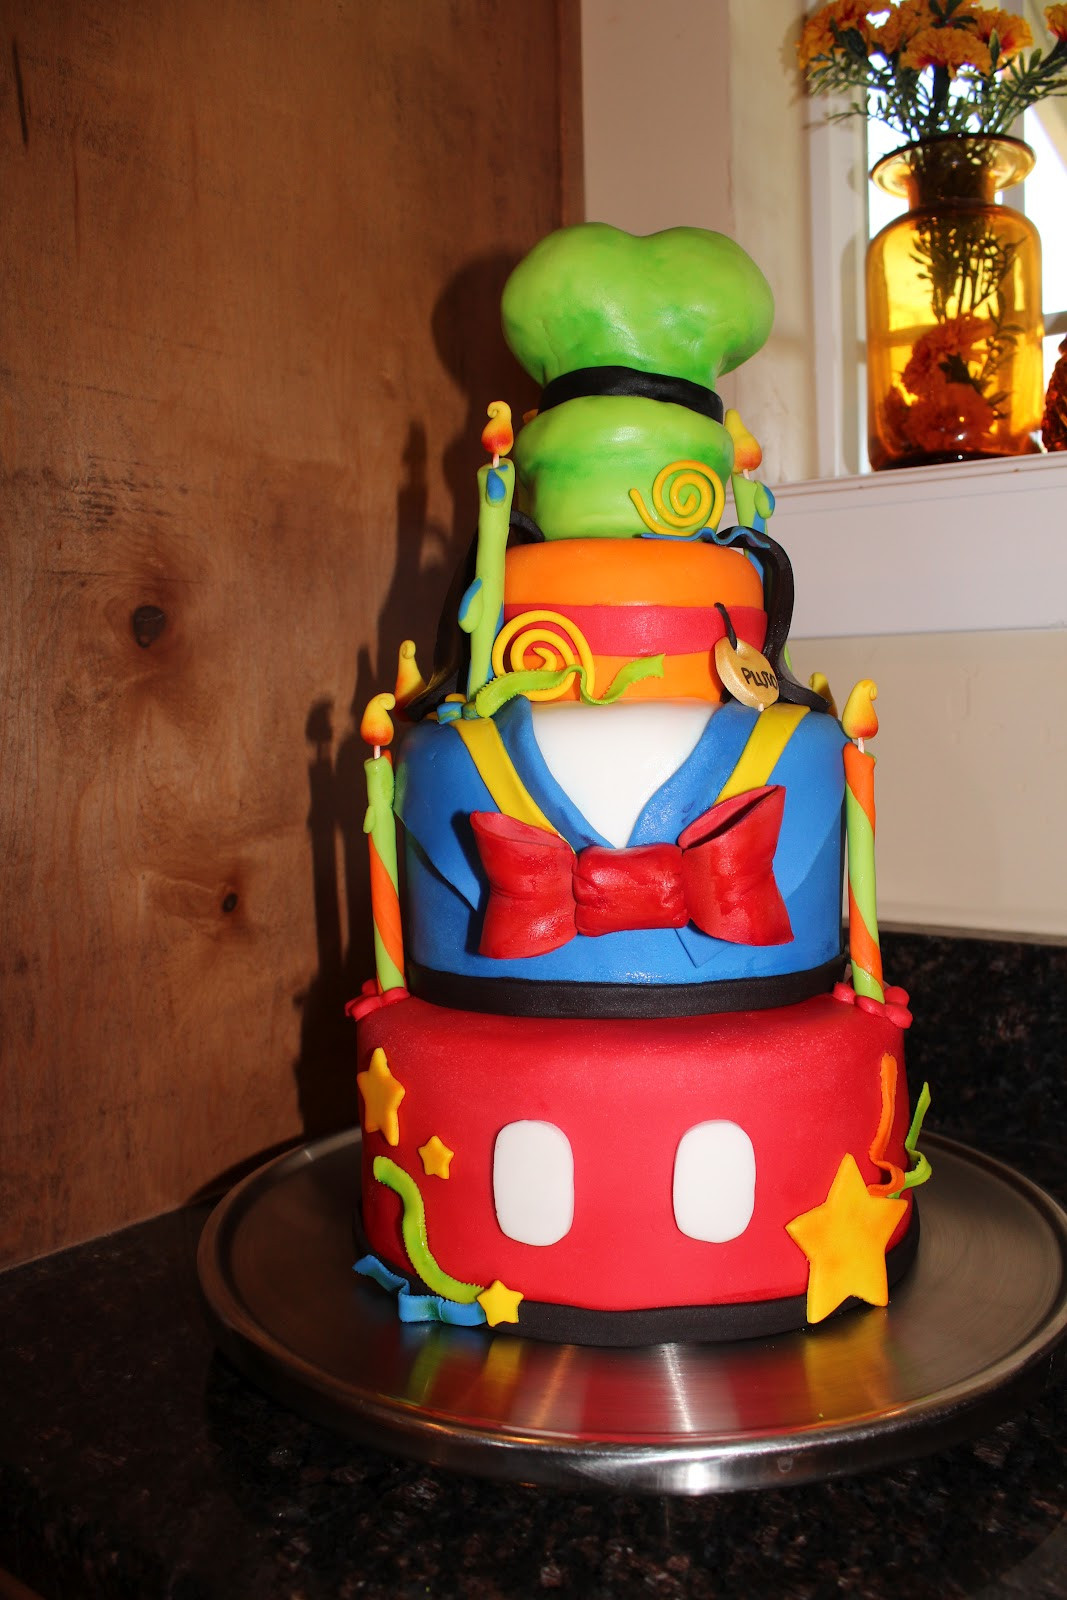 Best ideas about Photos Birthday Cake
. Save or Pin Disneyland Birthday Cake Now.